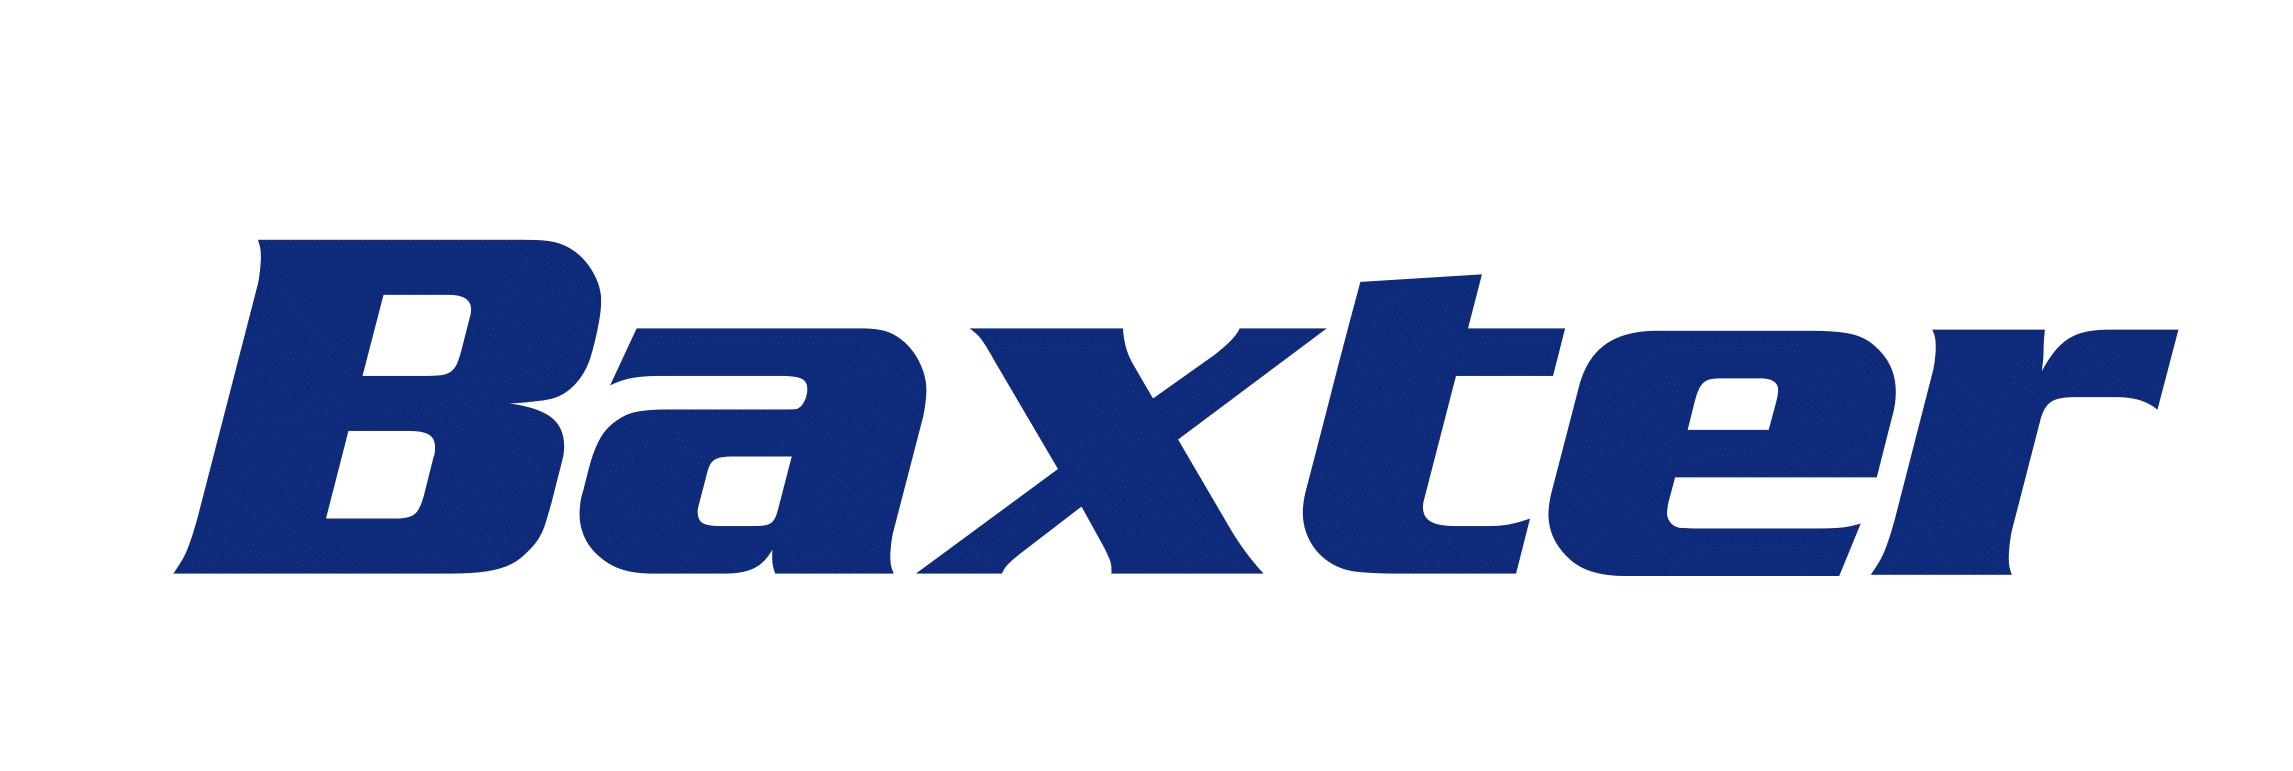 baxter_logo-1.jpg